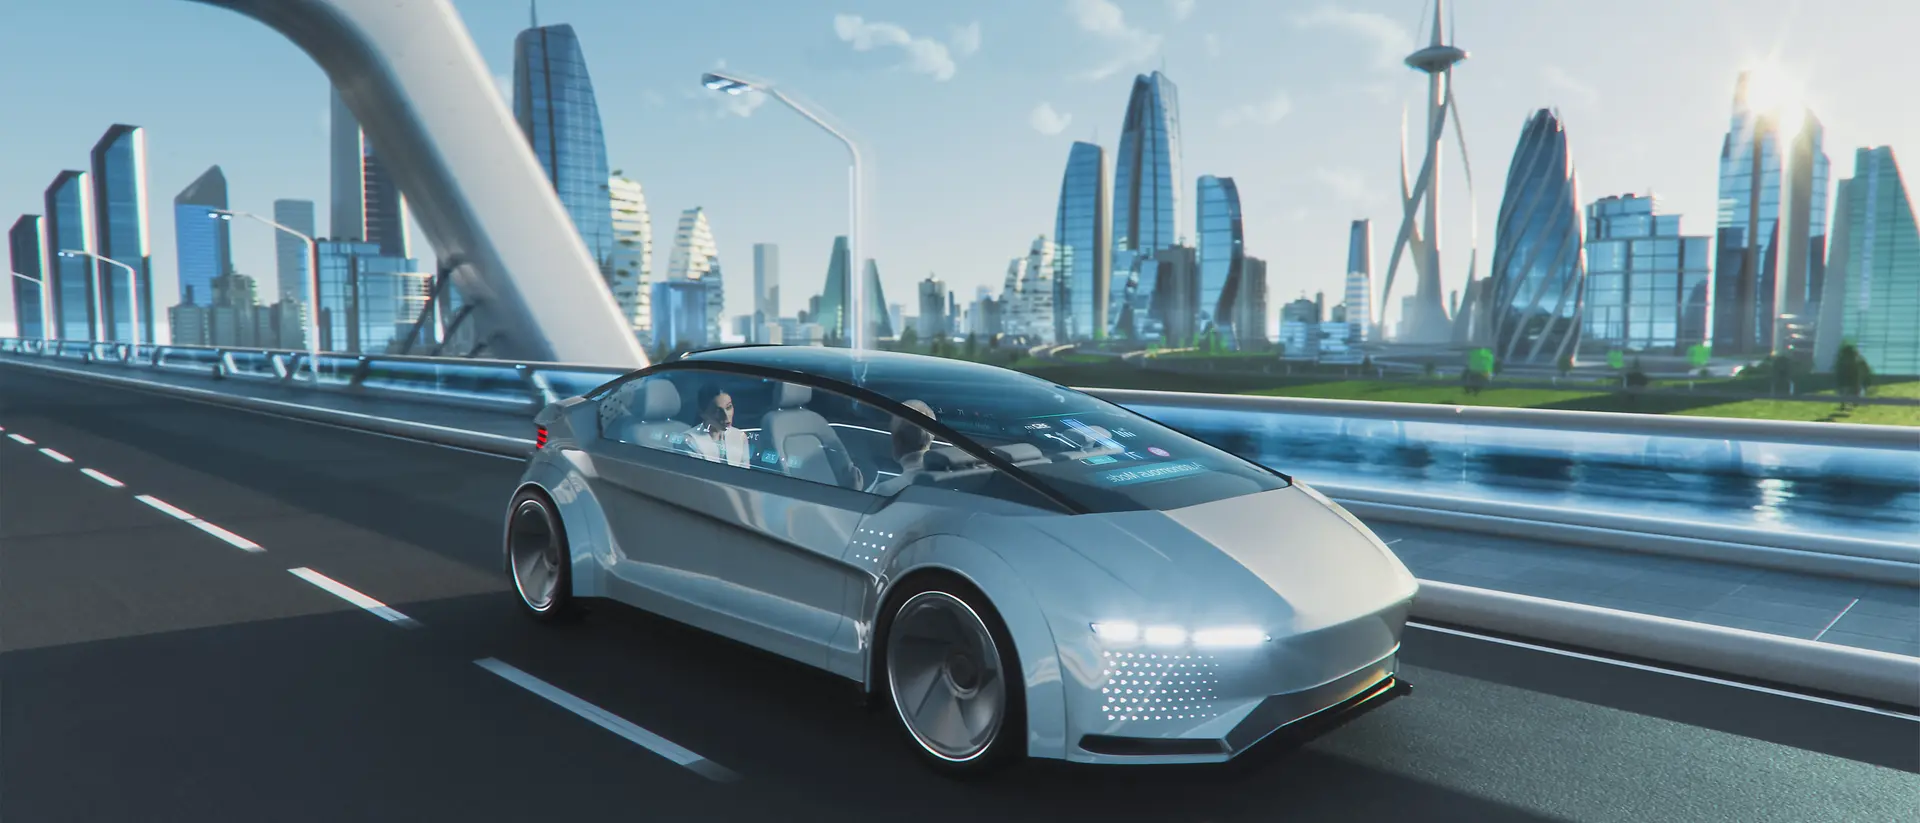 futuristic-autonomous-car-driving-adas-system-shutterstock